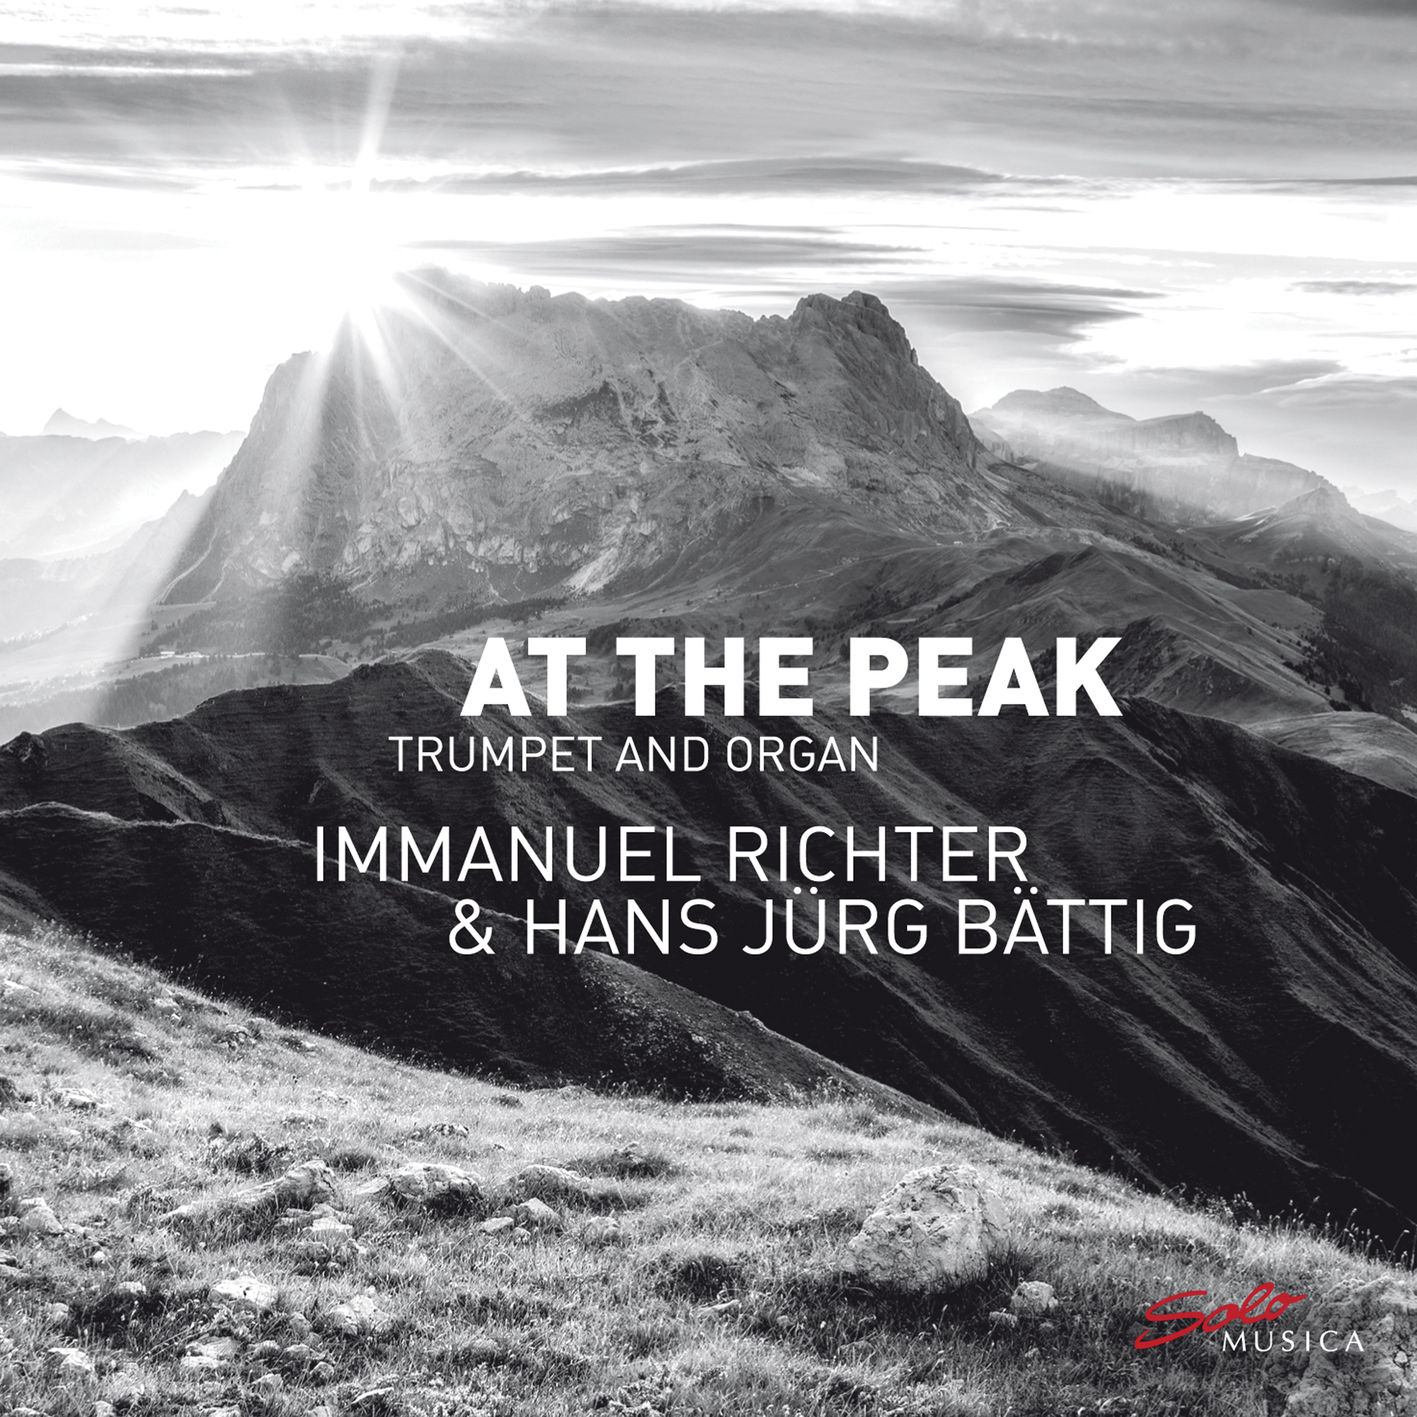 Immanuel Richter & Hans Jurg Battig – At the Peak (2019) [FLAC 24bit/96kHz]